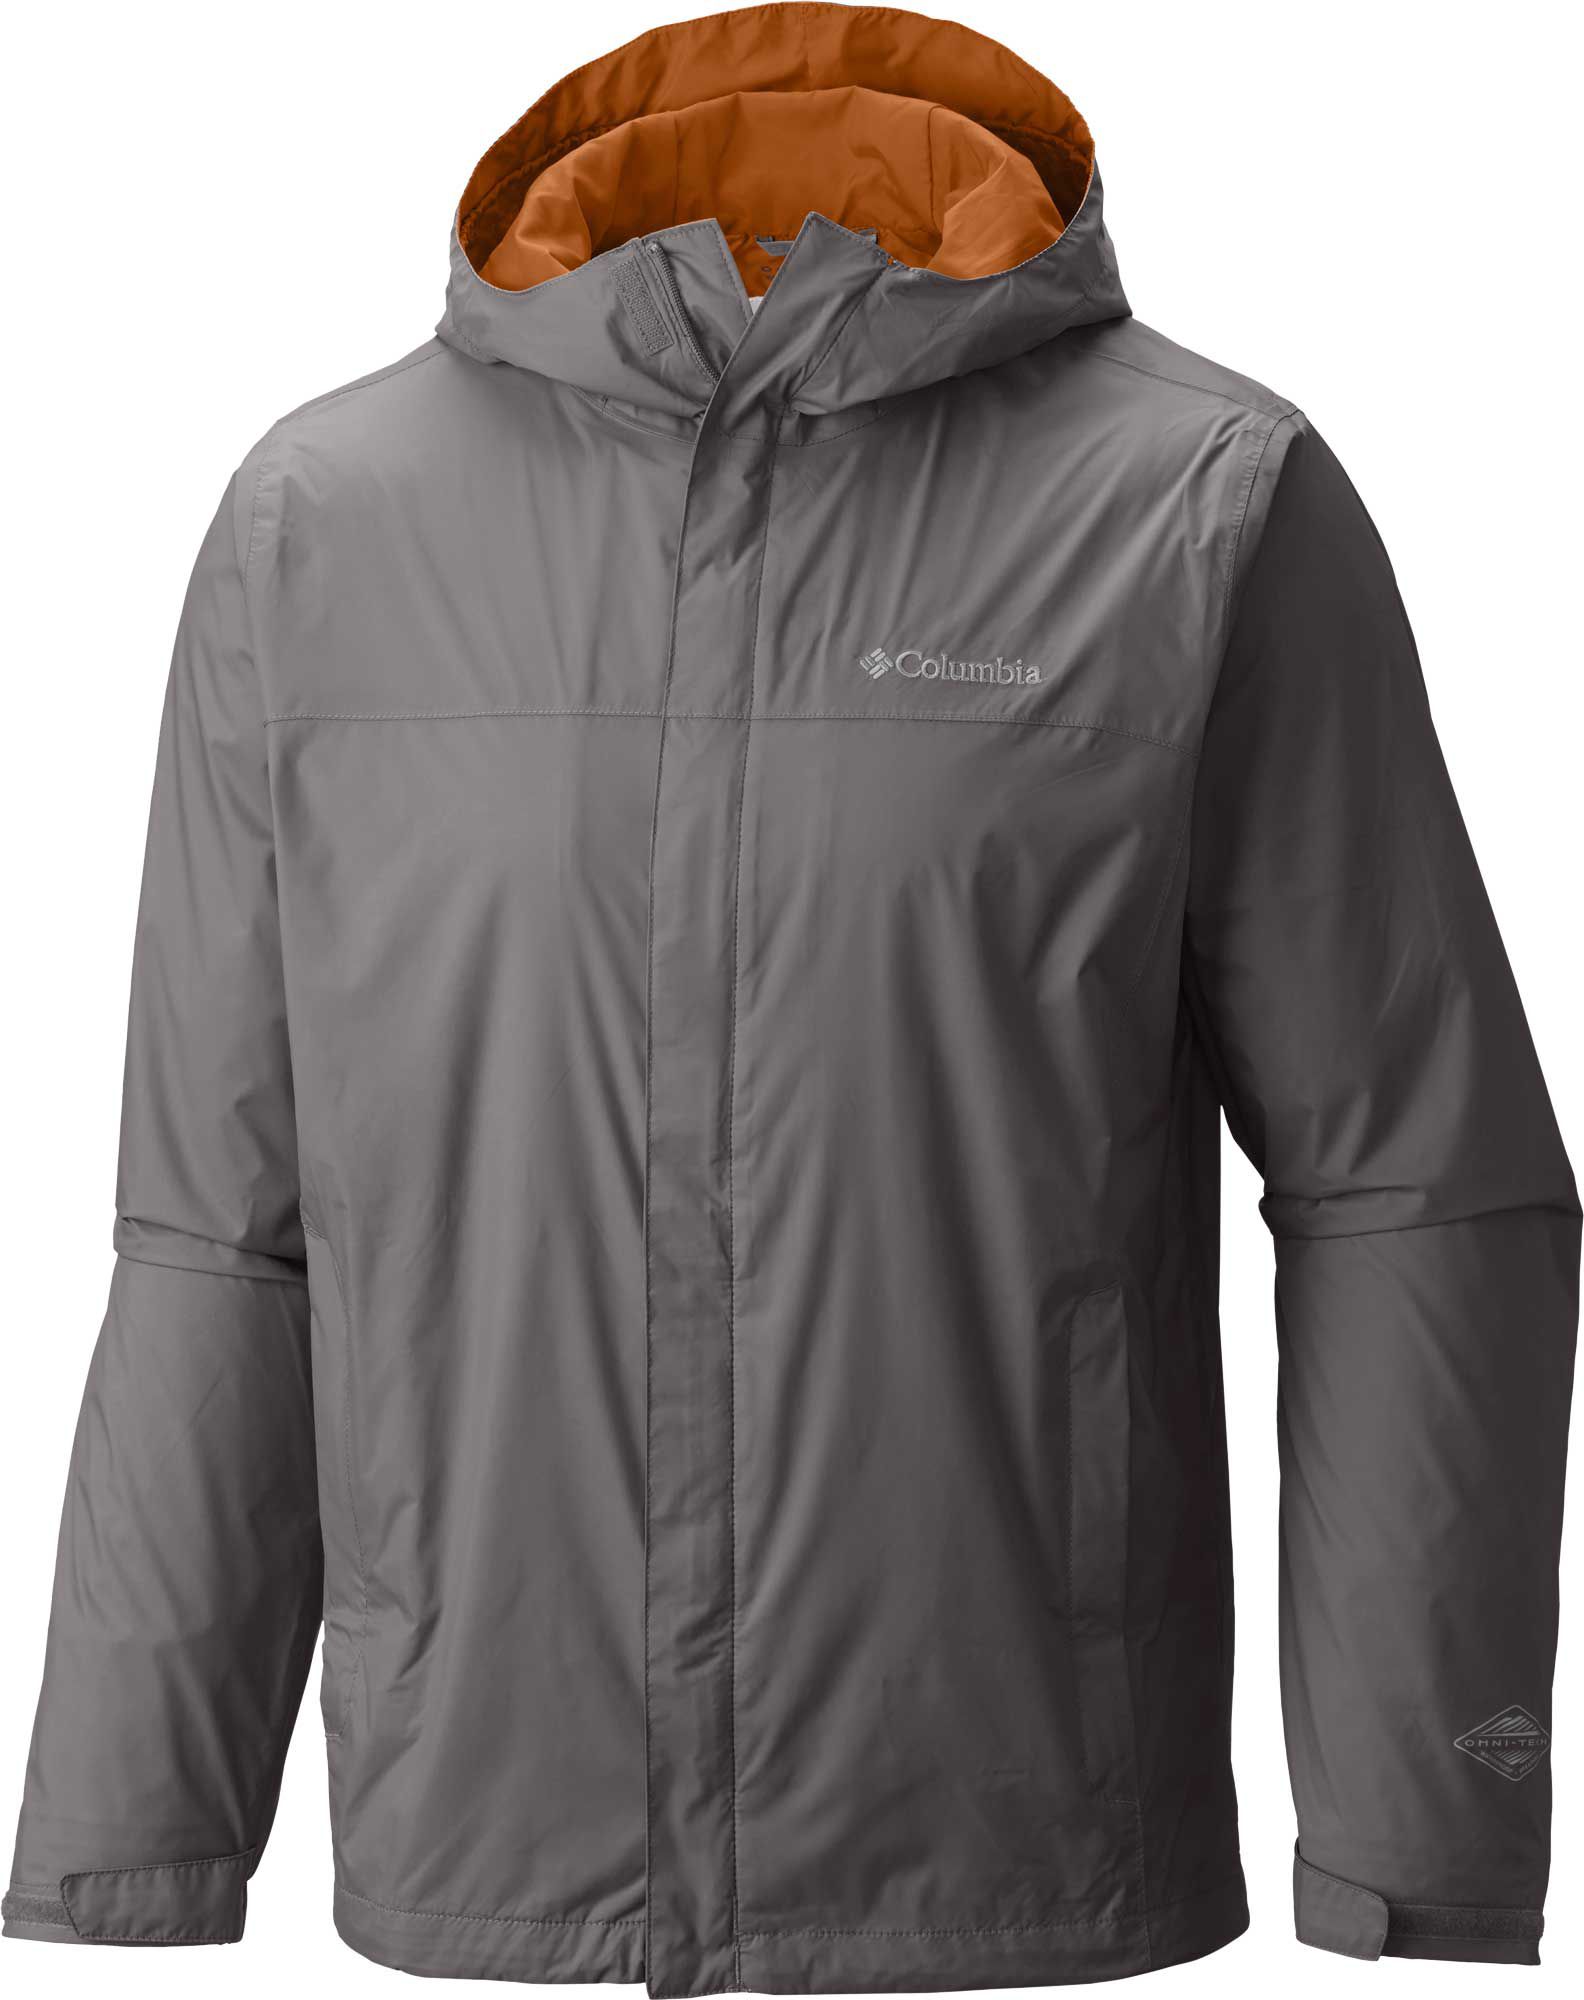 waterproof jacket product image · columbia menu0027s watertight ii rain jacket qdhgldp